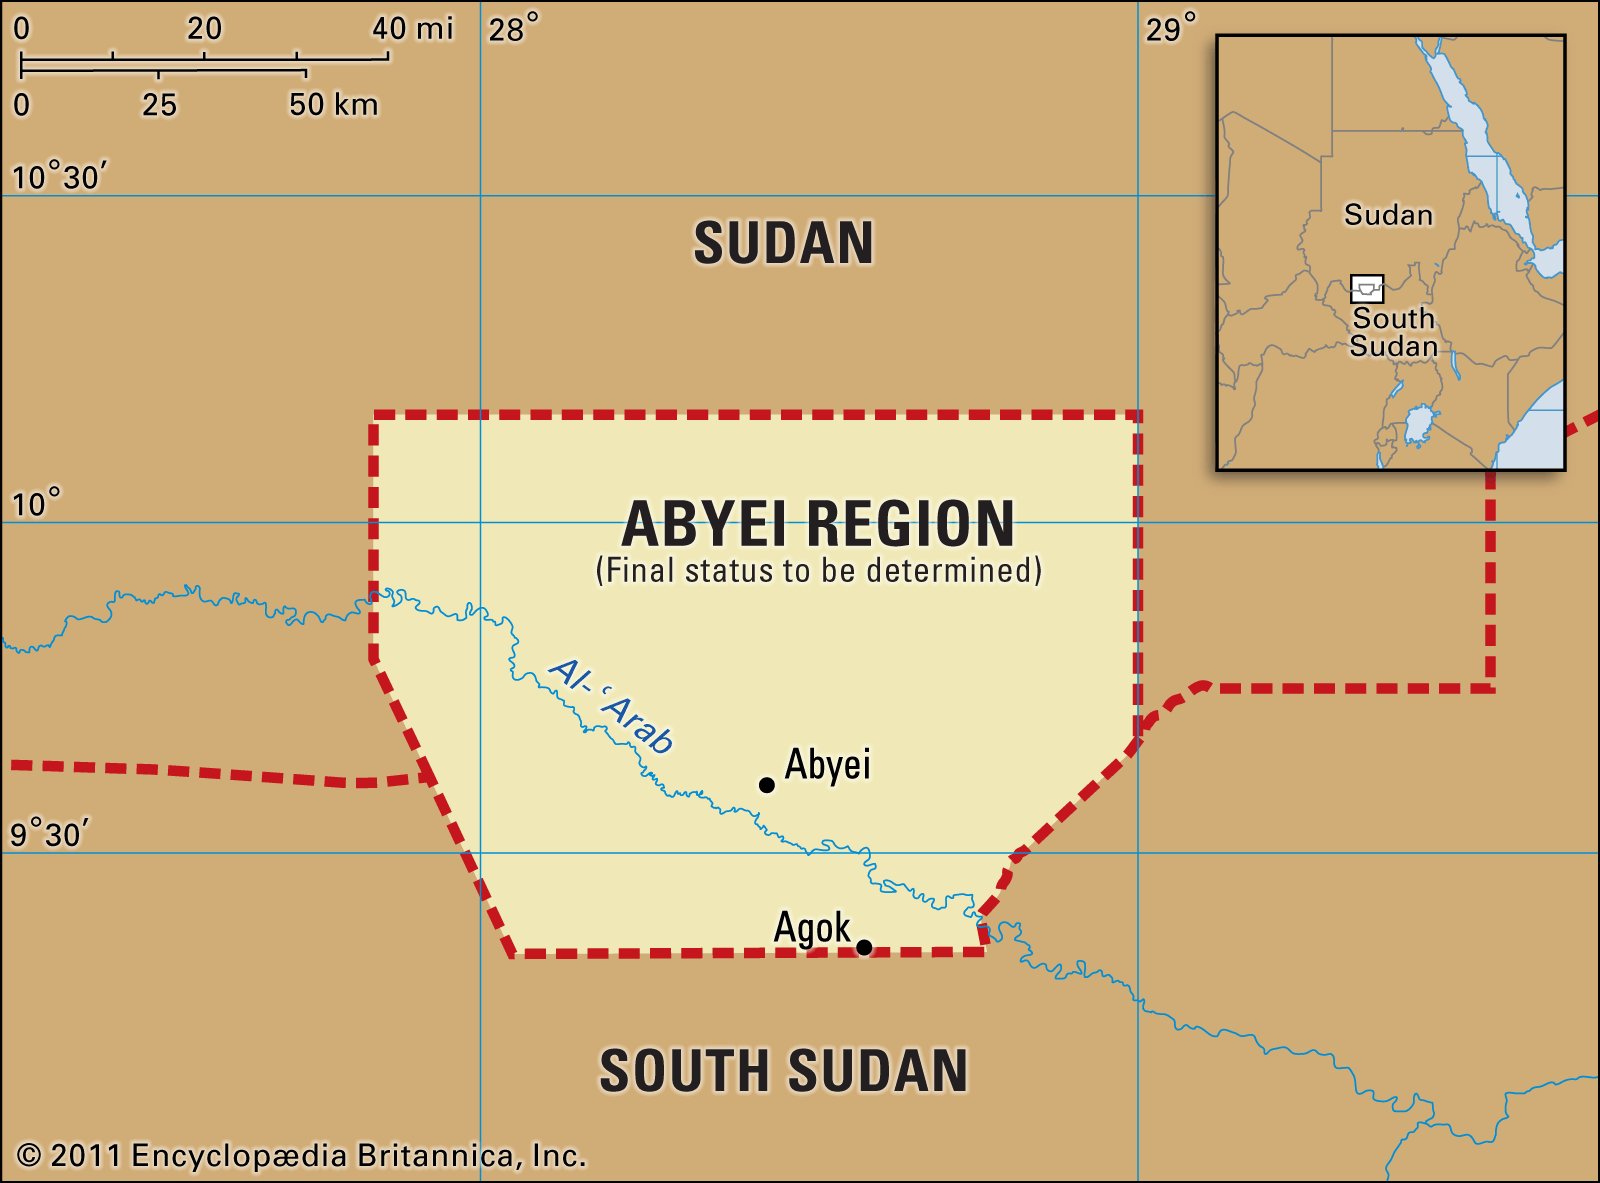 5 people killed, 3,000 heads of cattle stolen in Abyei